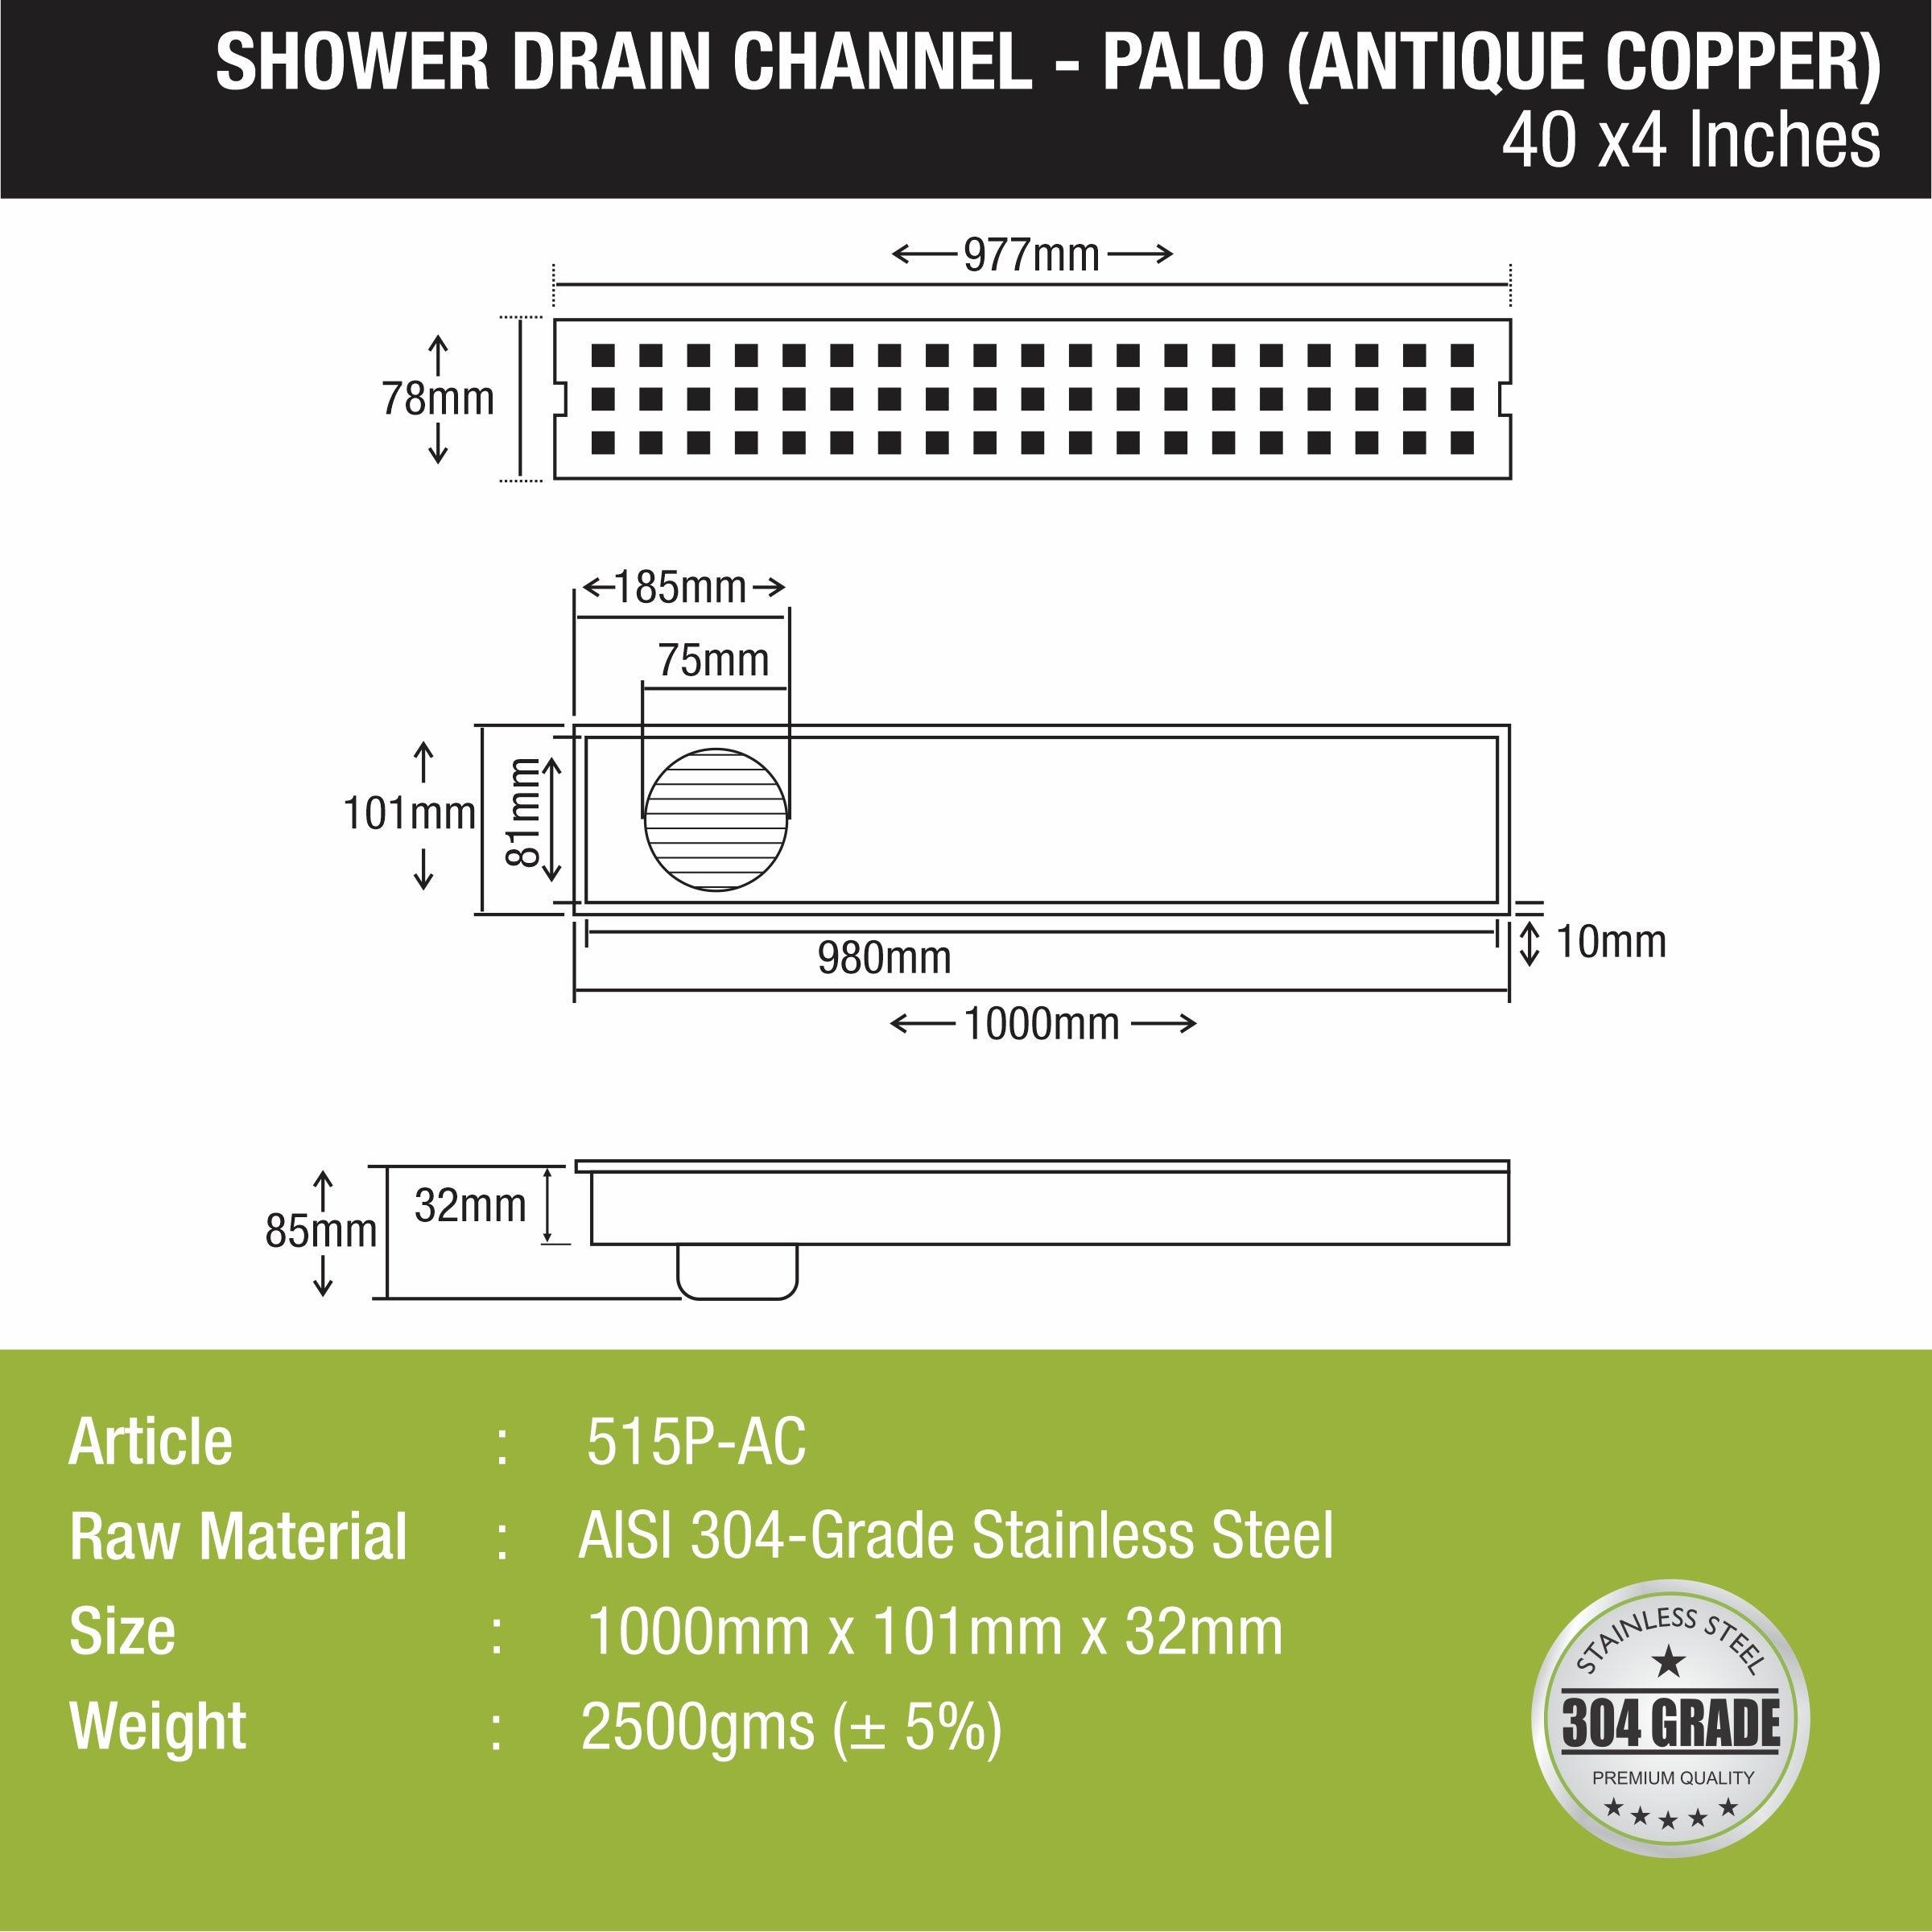 Palo Shower Drain Channel - Antique Copper (40 x 4 Inches) - LIPKA - Lipka Home